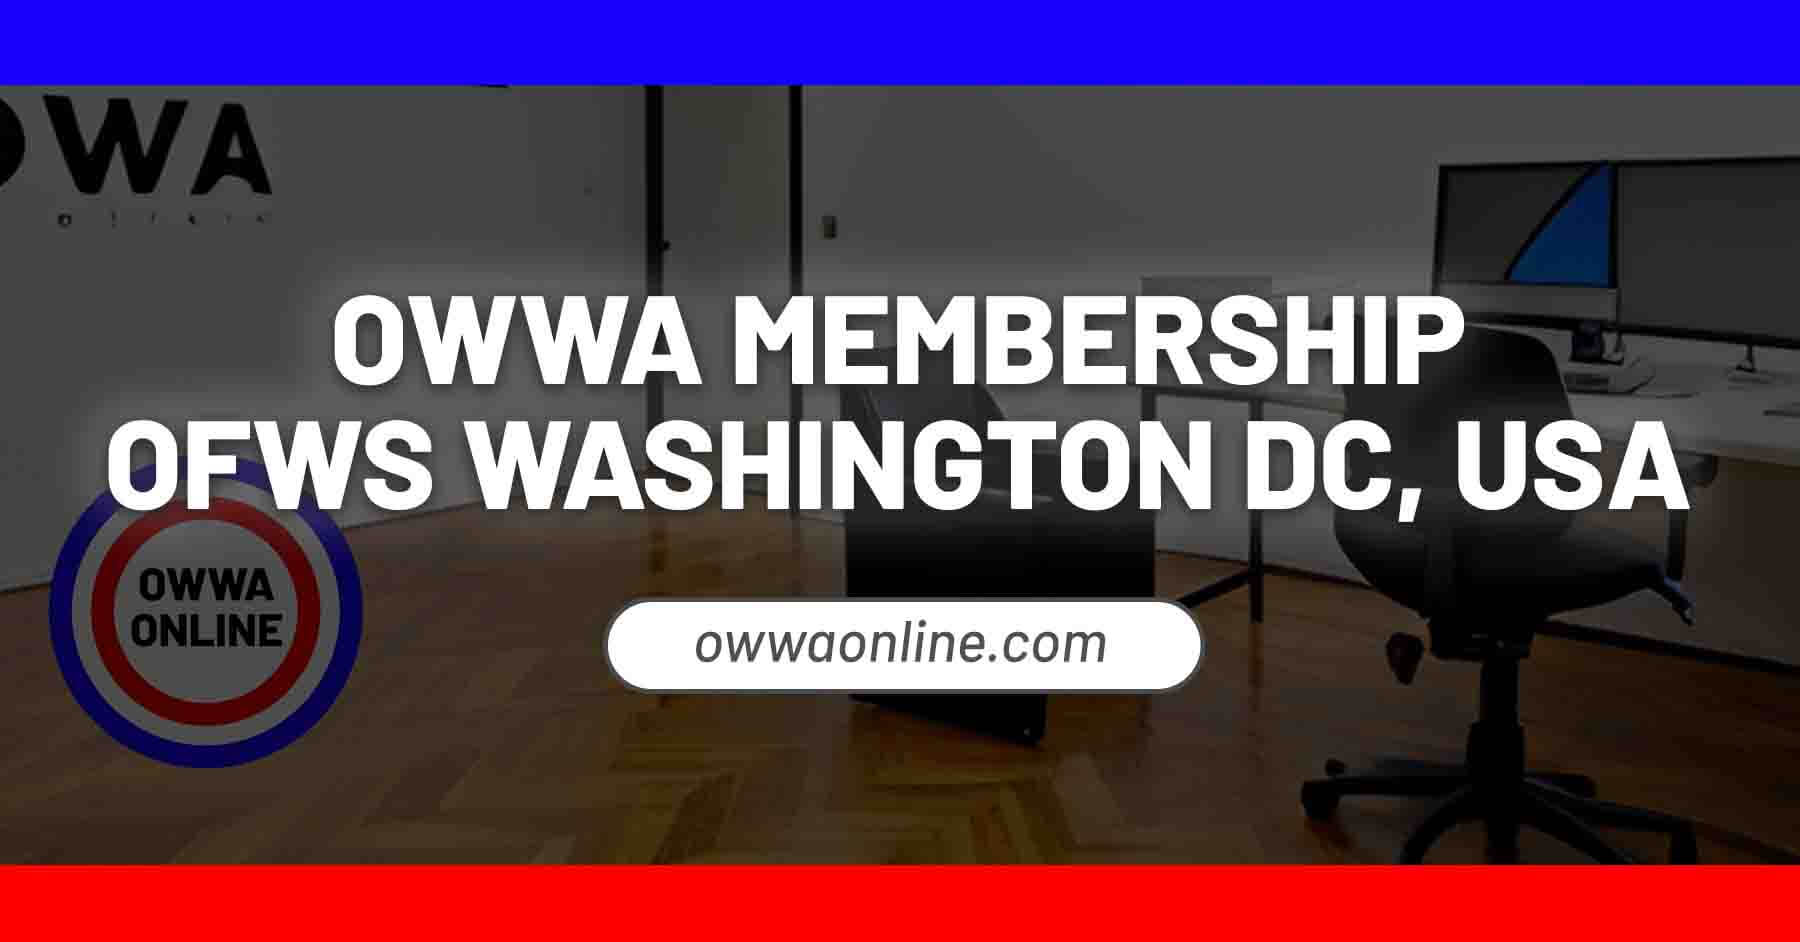 application for owwa membership renewal in washington dc usa